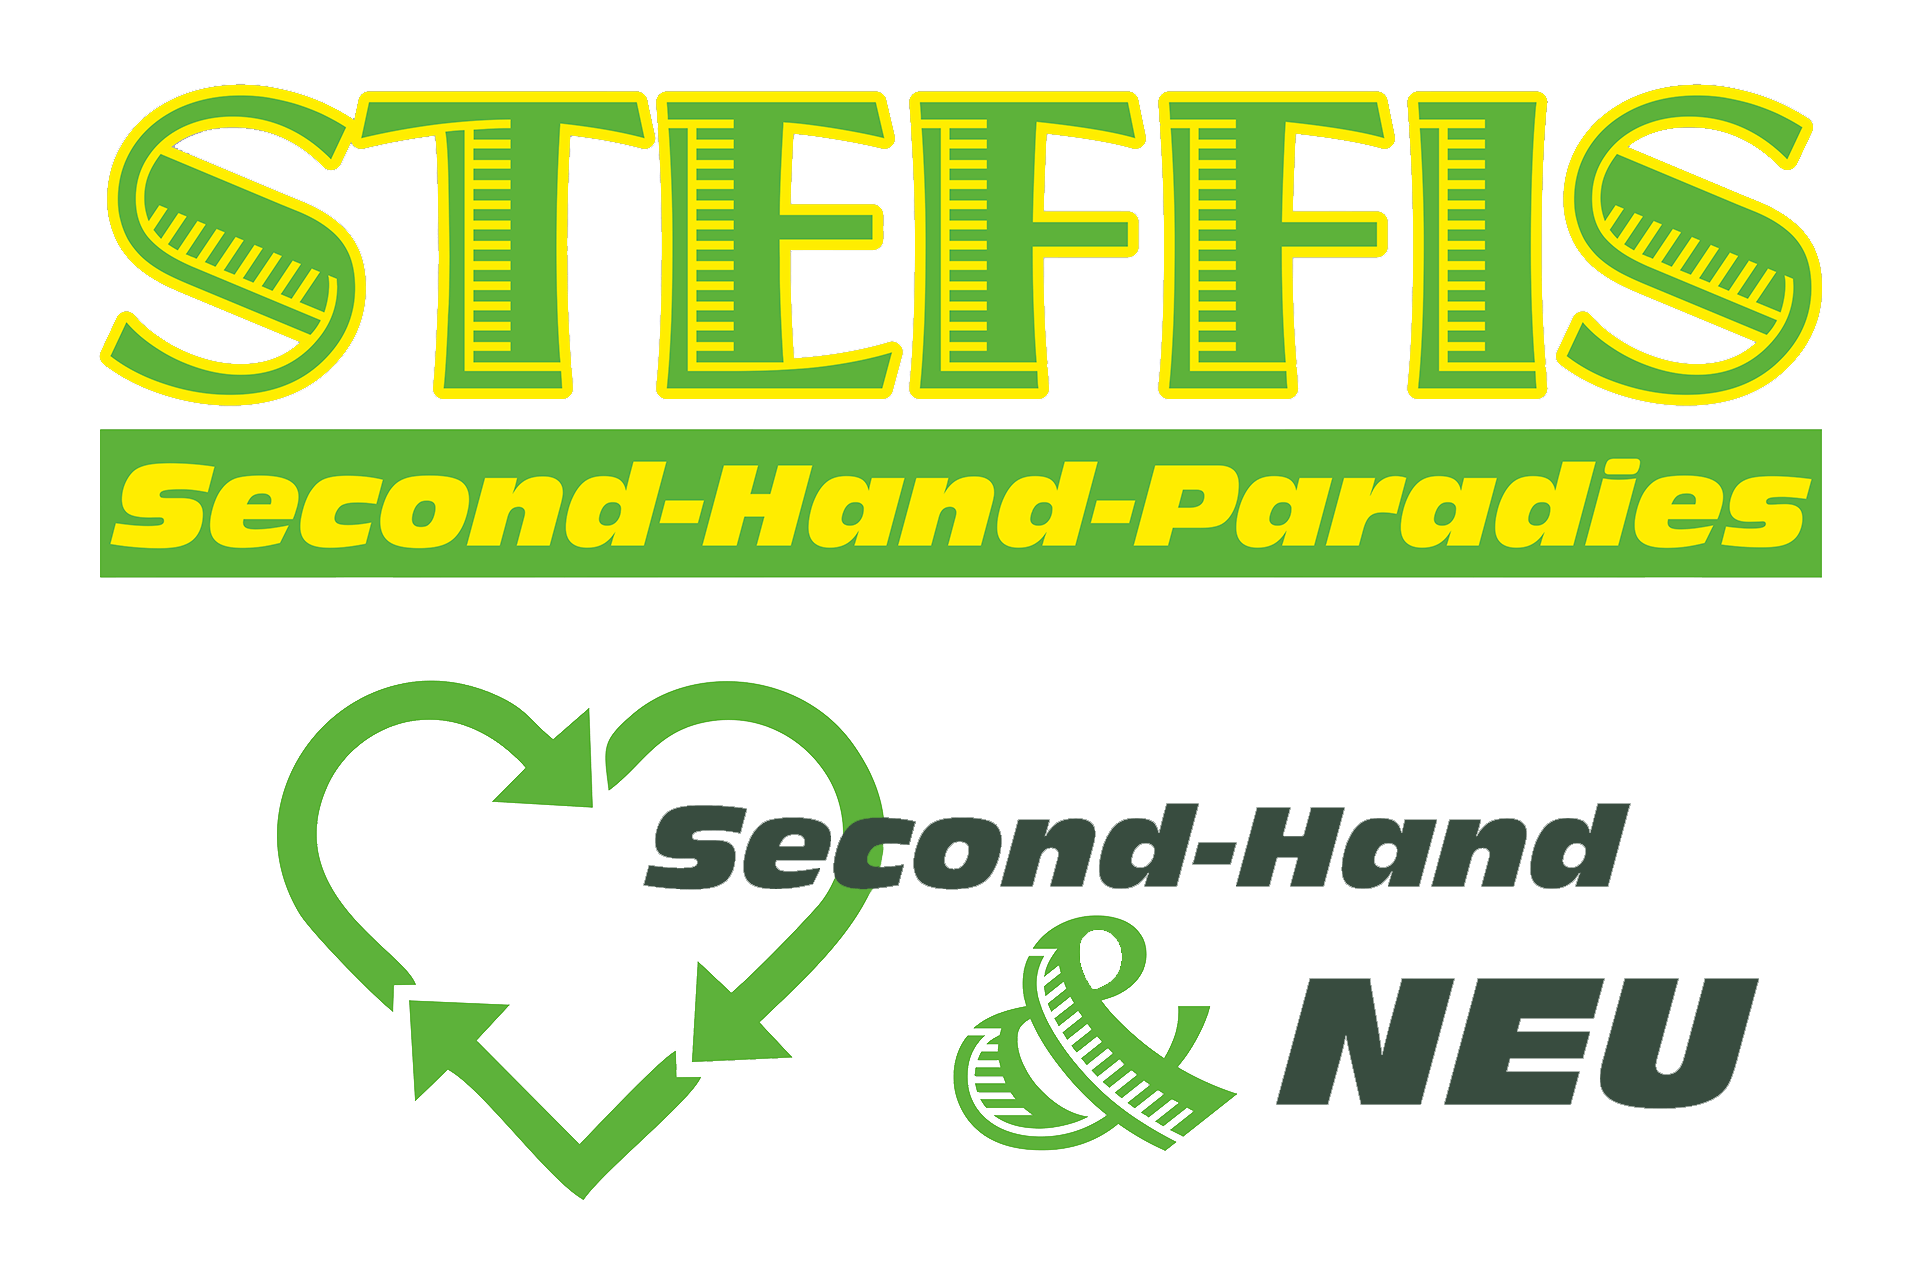  STEFFIS Second-Hand-Paradies